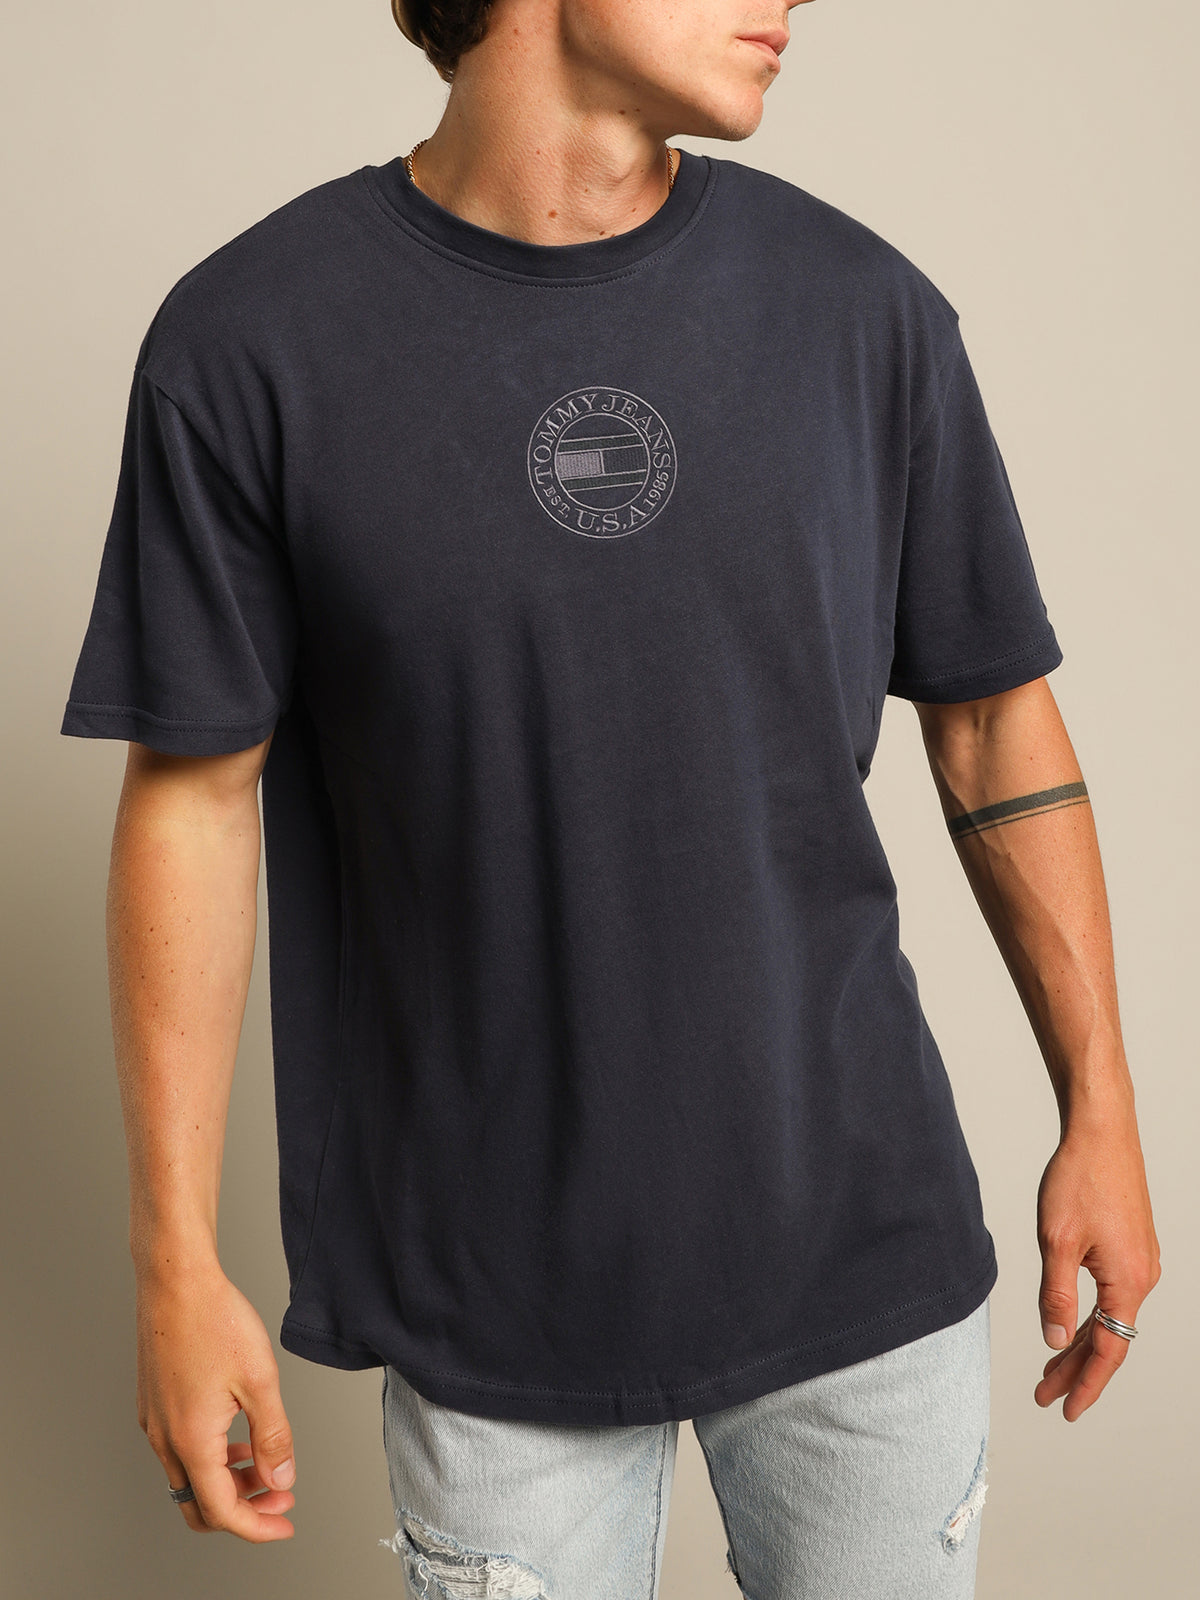 Tonal Circular Embroidery T-Shirt in Twilight Navy Blue